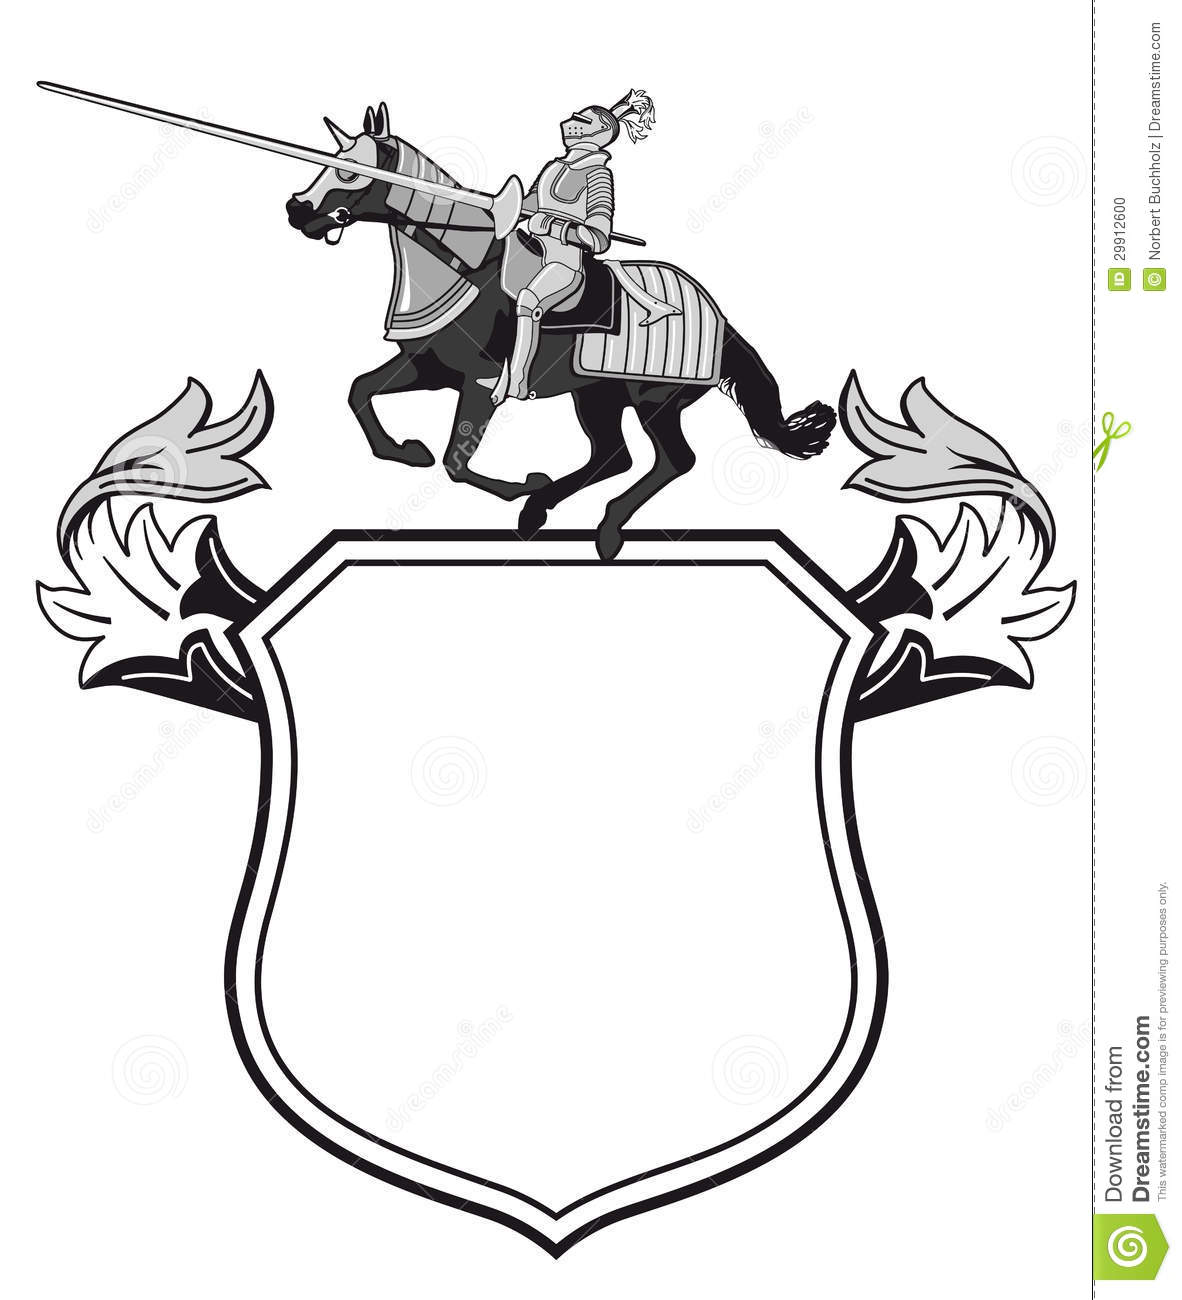 Heraldic knights shield